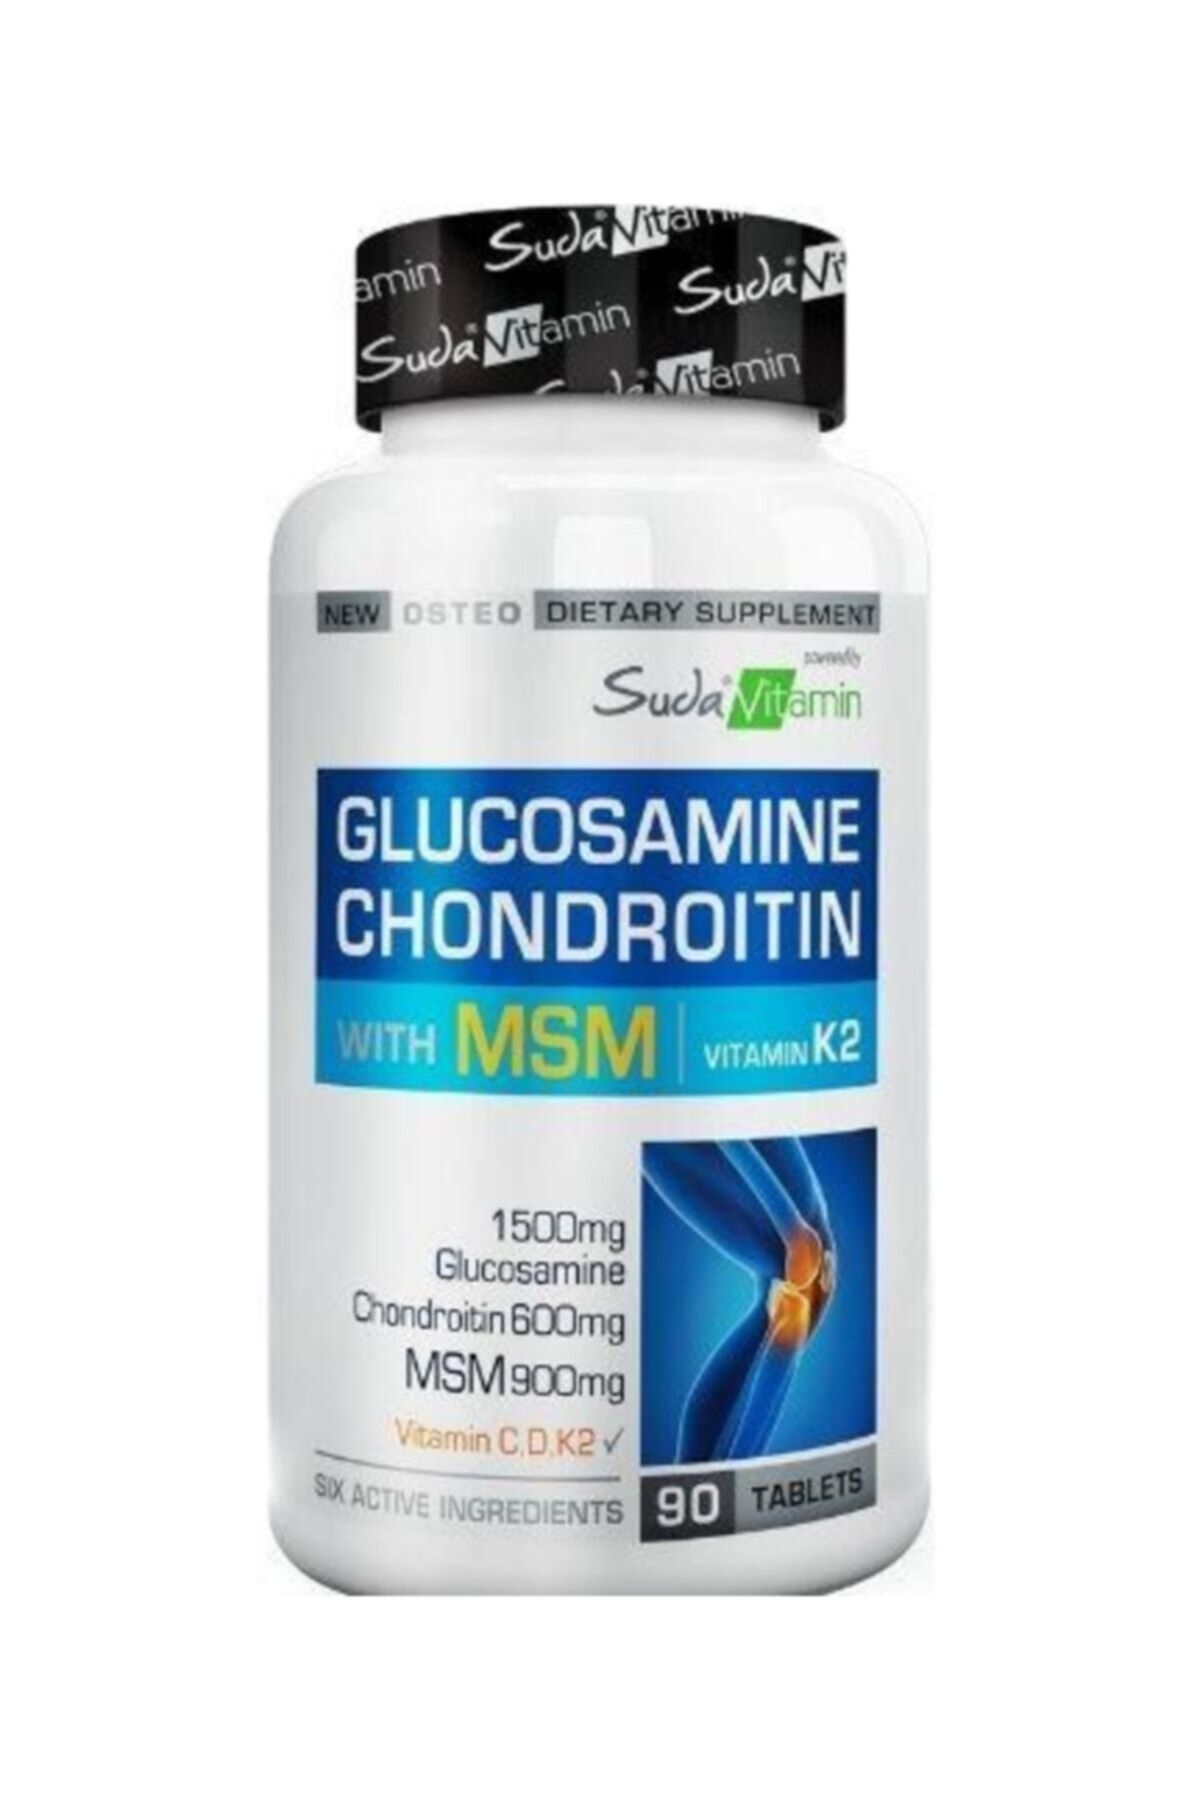 Suda Vitamin Glucosamine Chondroitin With Msm Vitamin K2 90 Tablet